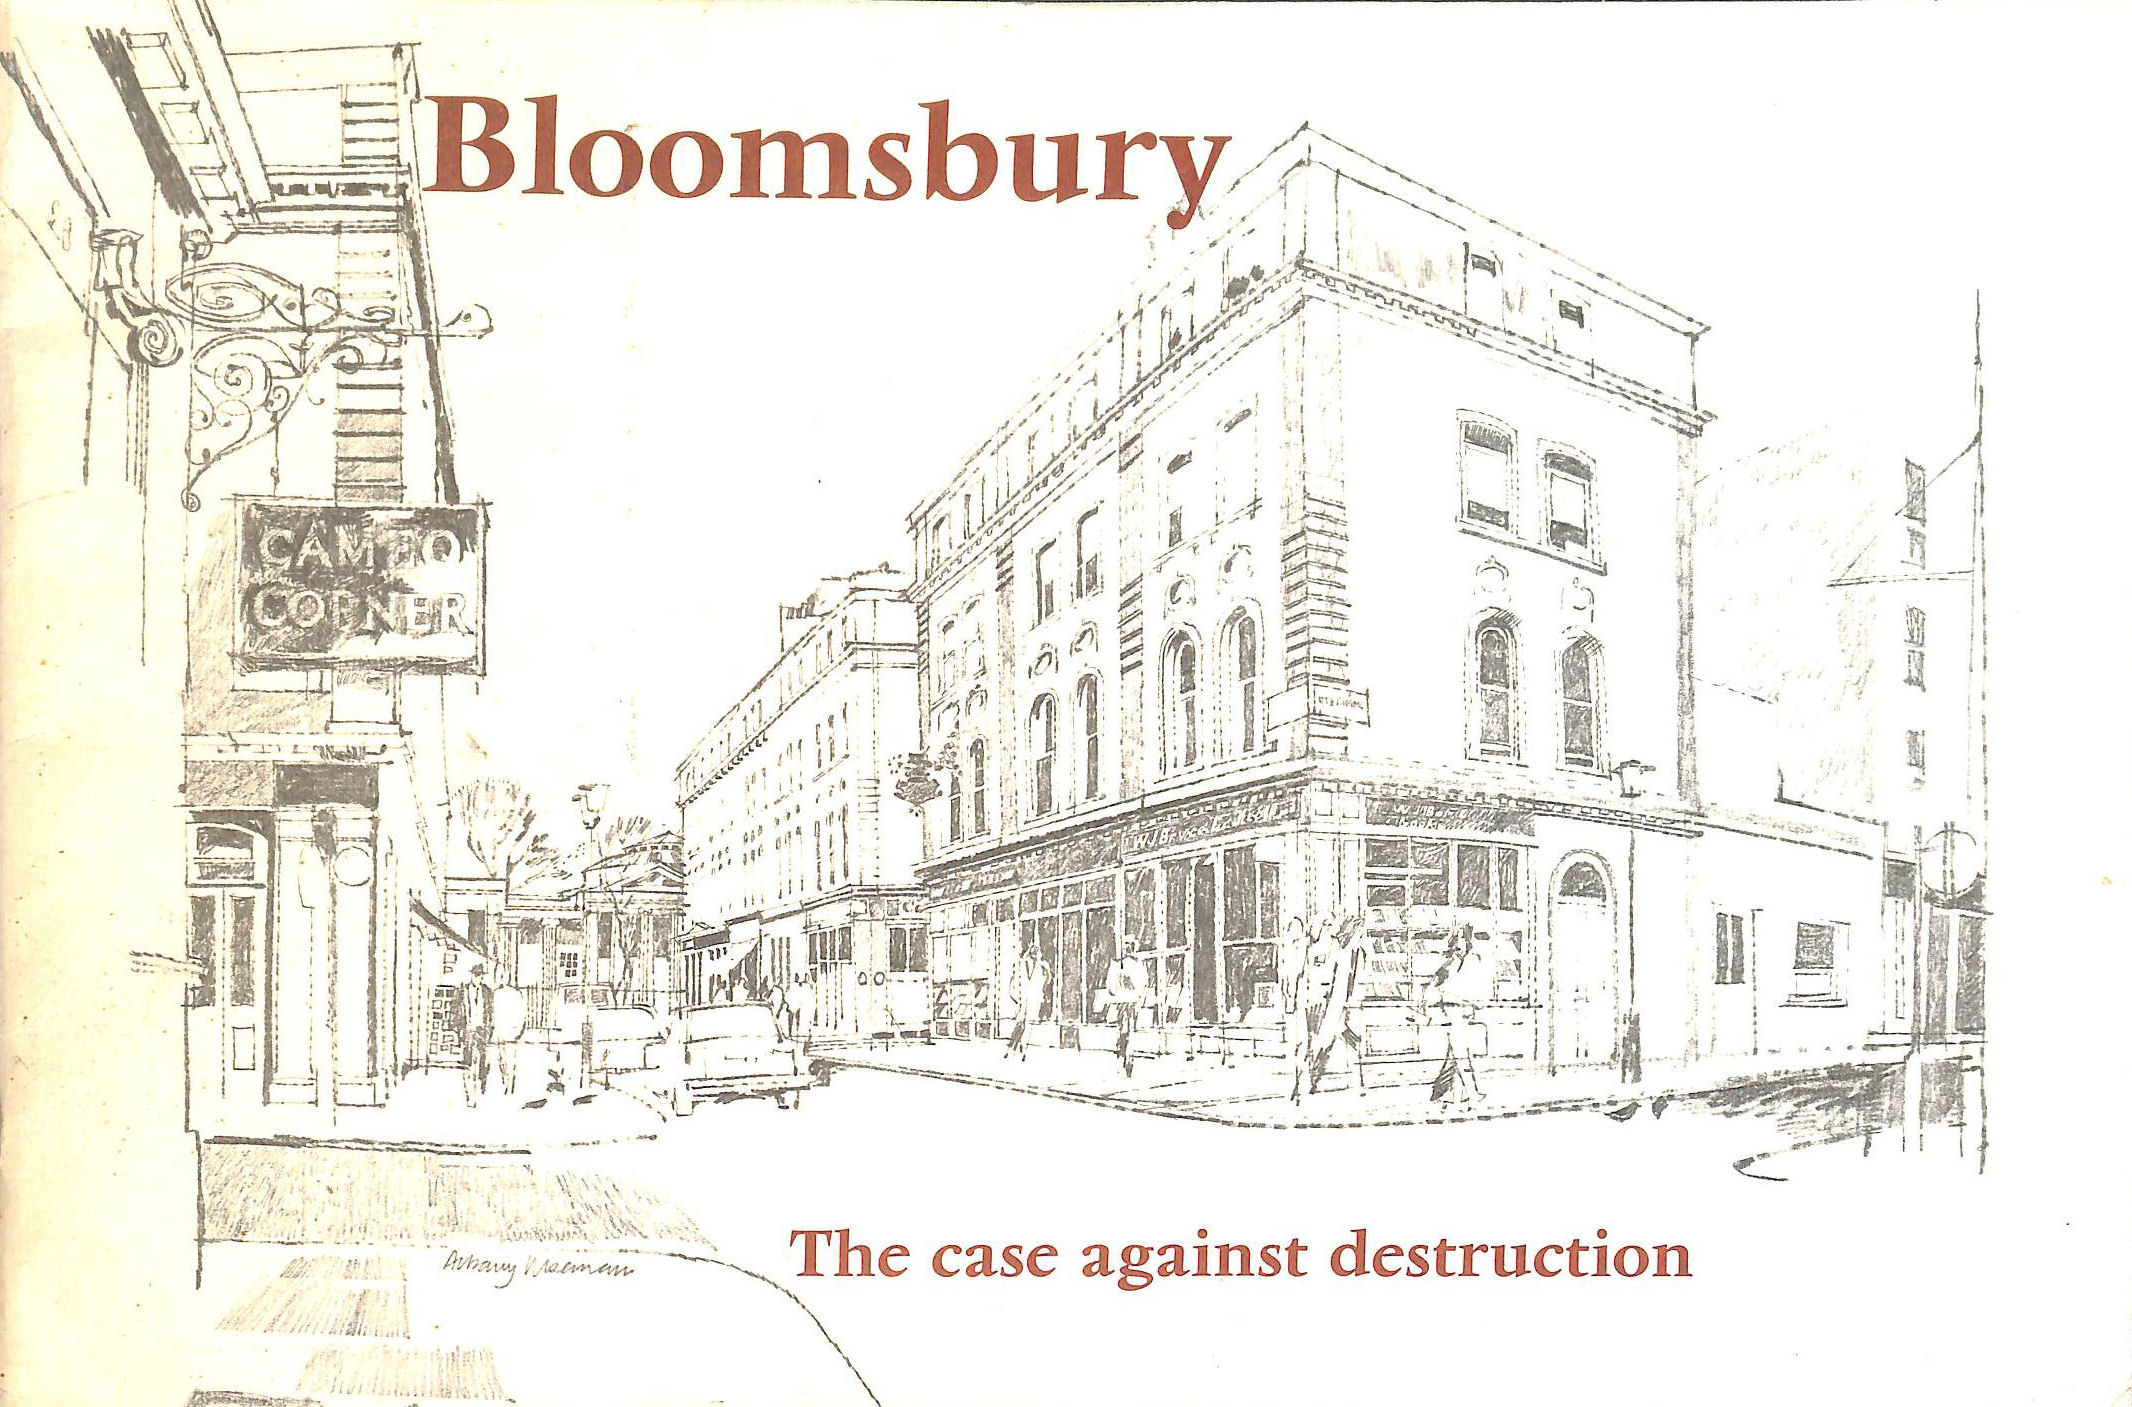 CAMDEN . ENGLAND LONDON BOROUGH COUNCIL - Bloomsbury - the case against destruction